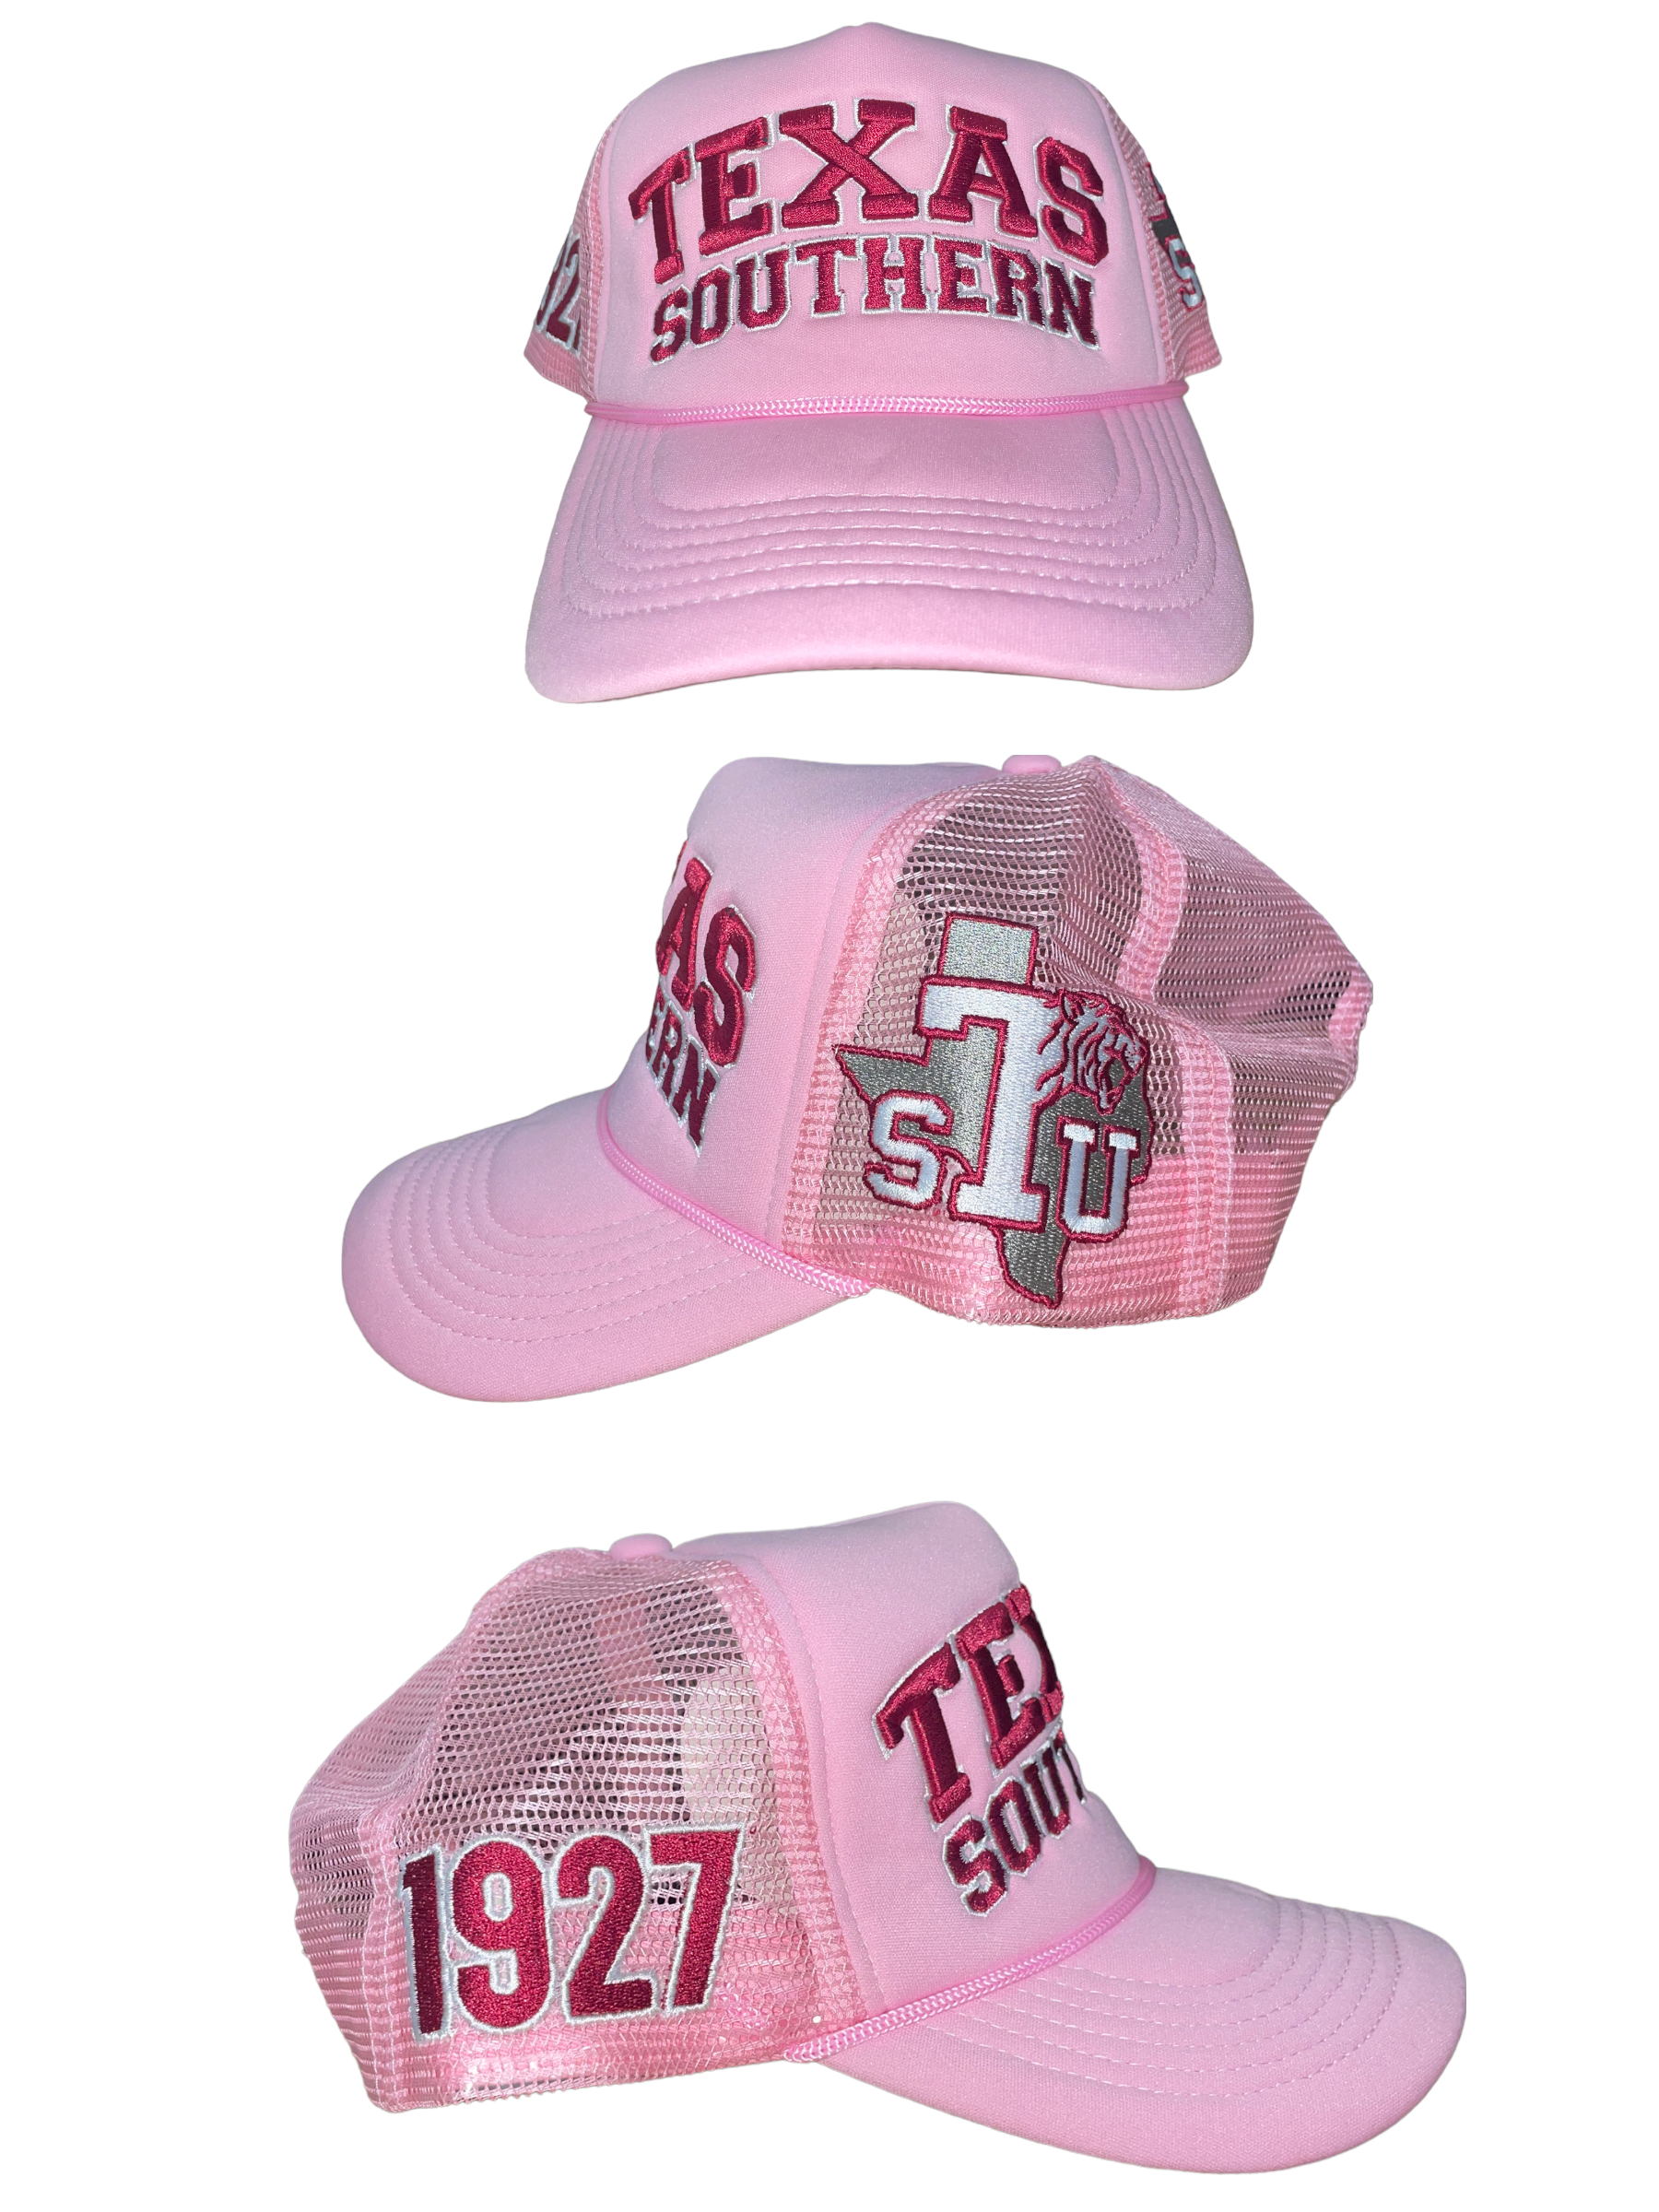 TEXAS SOUTHERN UNIVERSITY TRUCKER HATS Pink